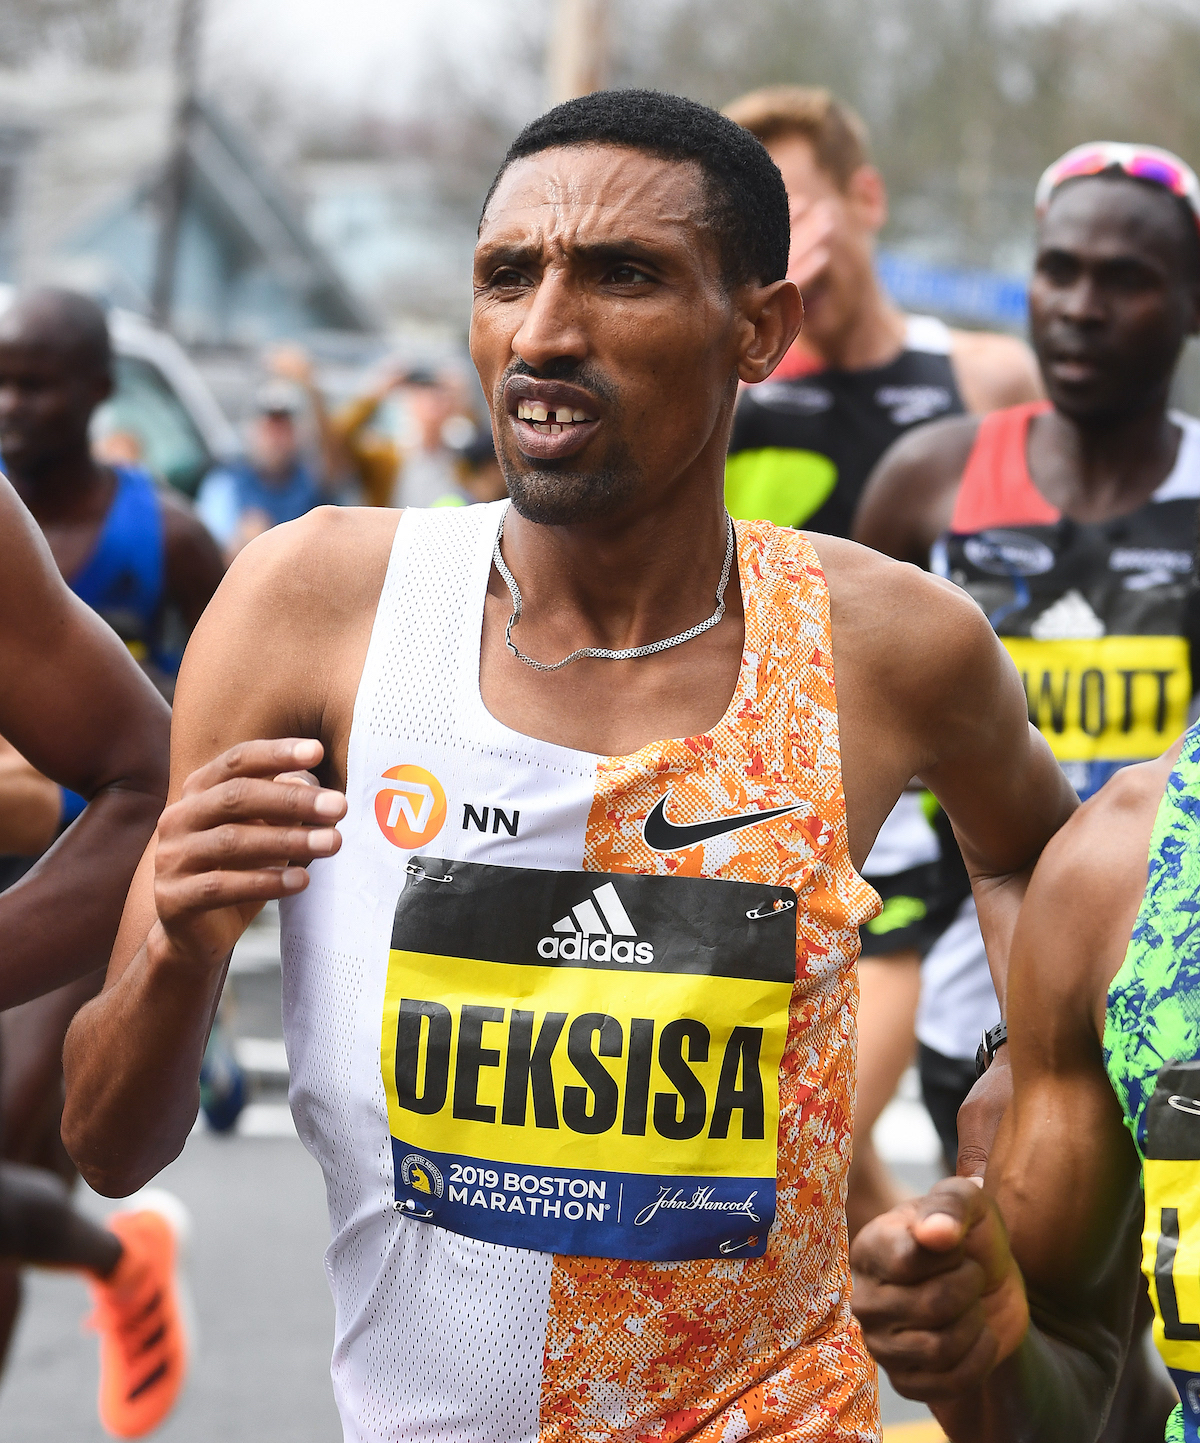 Ethiopian duo Worknesh Degefa and Soloman Deksisa will be among the favourites at the Standard Chartered Dubai Marathon on January 24